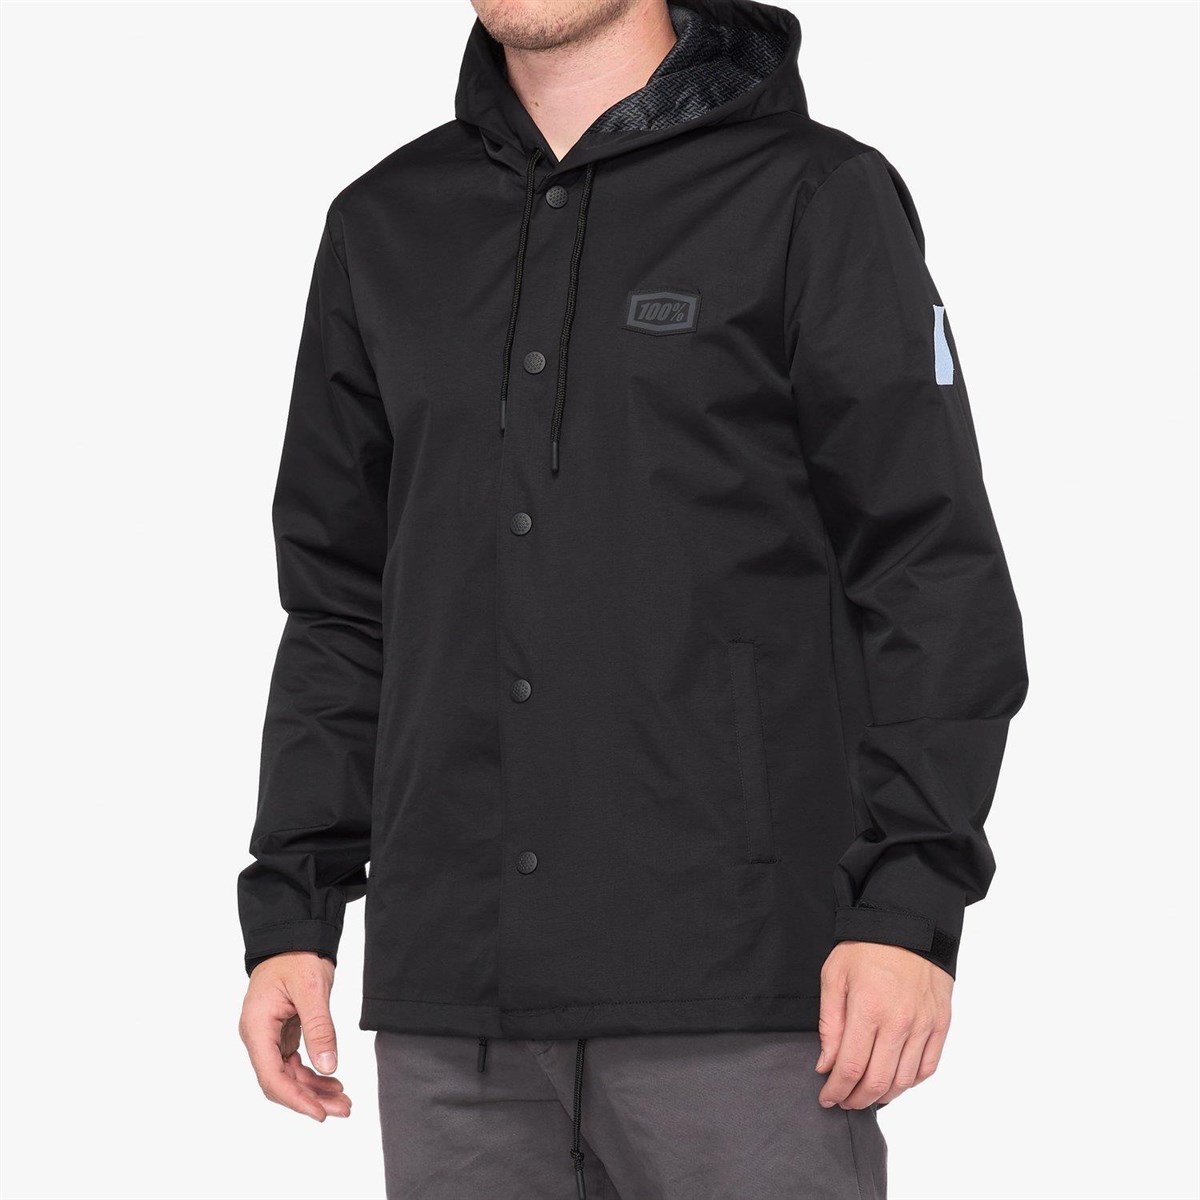 100% Hydromatic Parka Lightweight Waterproof Jacket product image